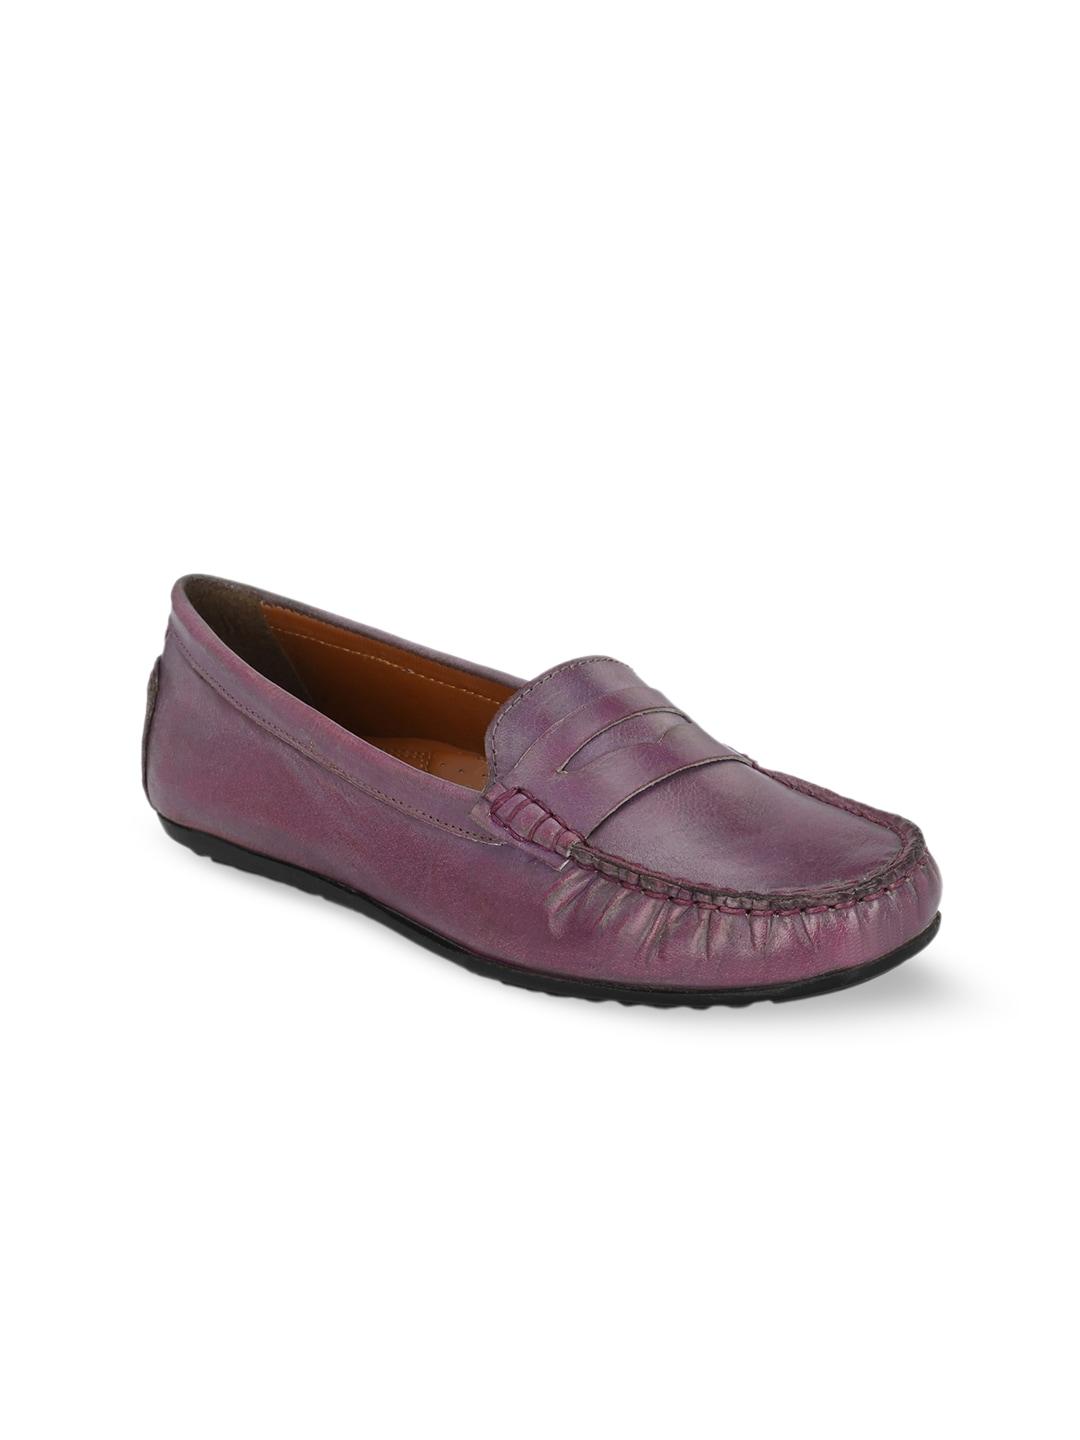 carlo-romano-women-lightweight-leather-penny-loafers